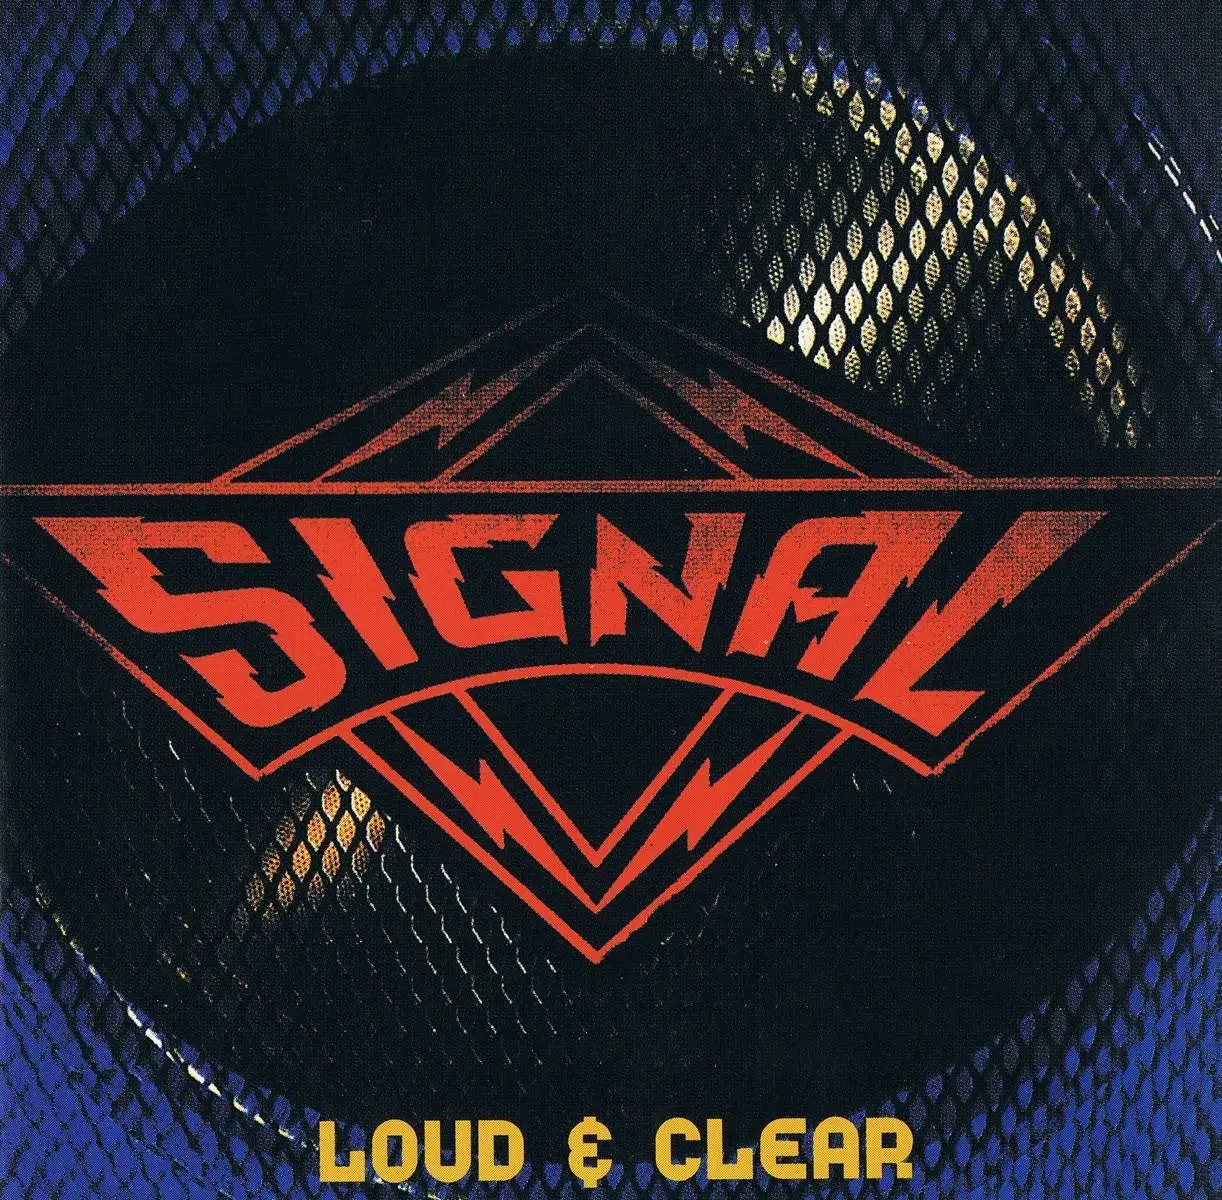 Loud and clear. Signal группа 1989. Signal Band. Signal - Loud & Clear. Signal [USA-2] - Loud & Clear (1989) AOR.